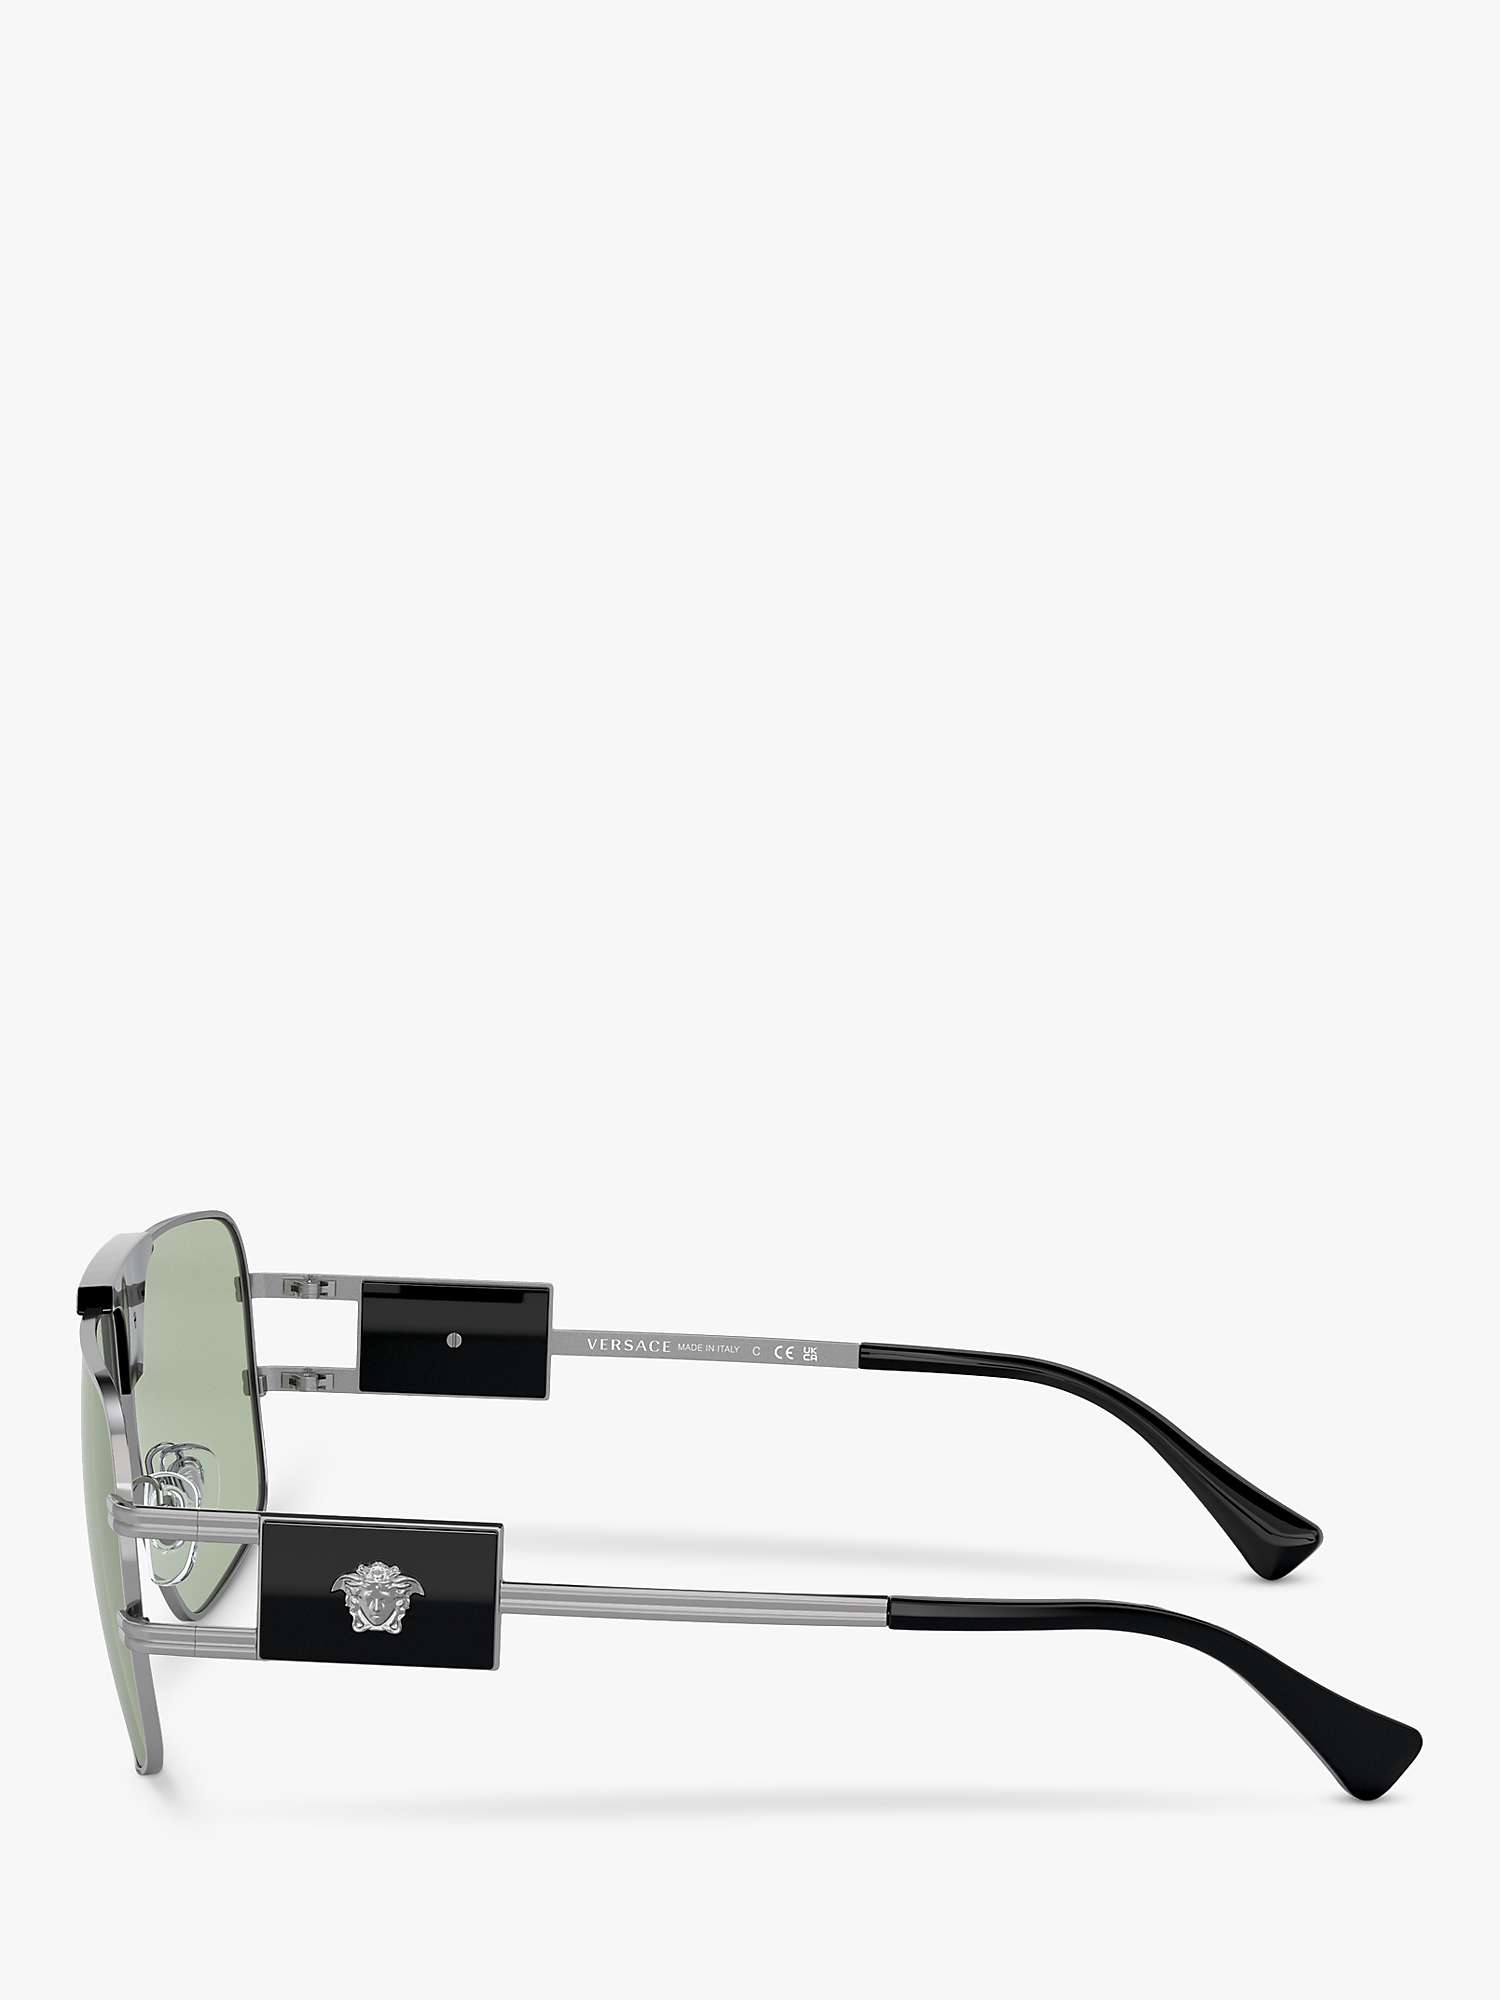 Buy Versace VE2251 Men's Aviator Sunglasses, Gunmetal Online at johnlewis.com